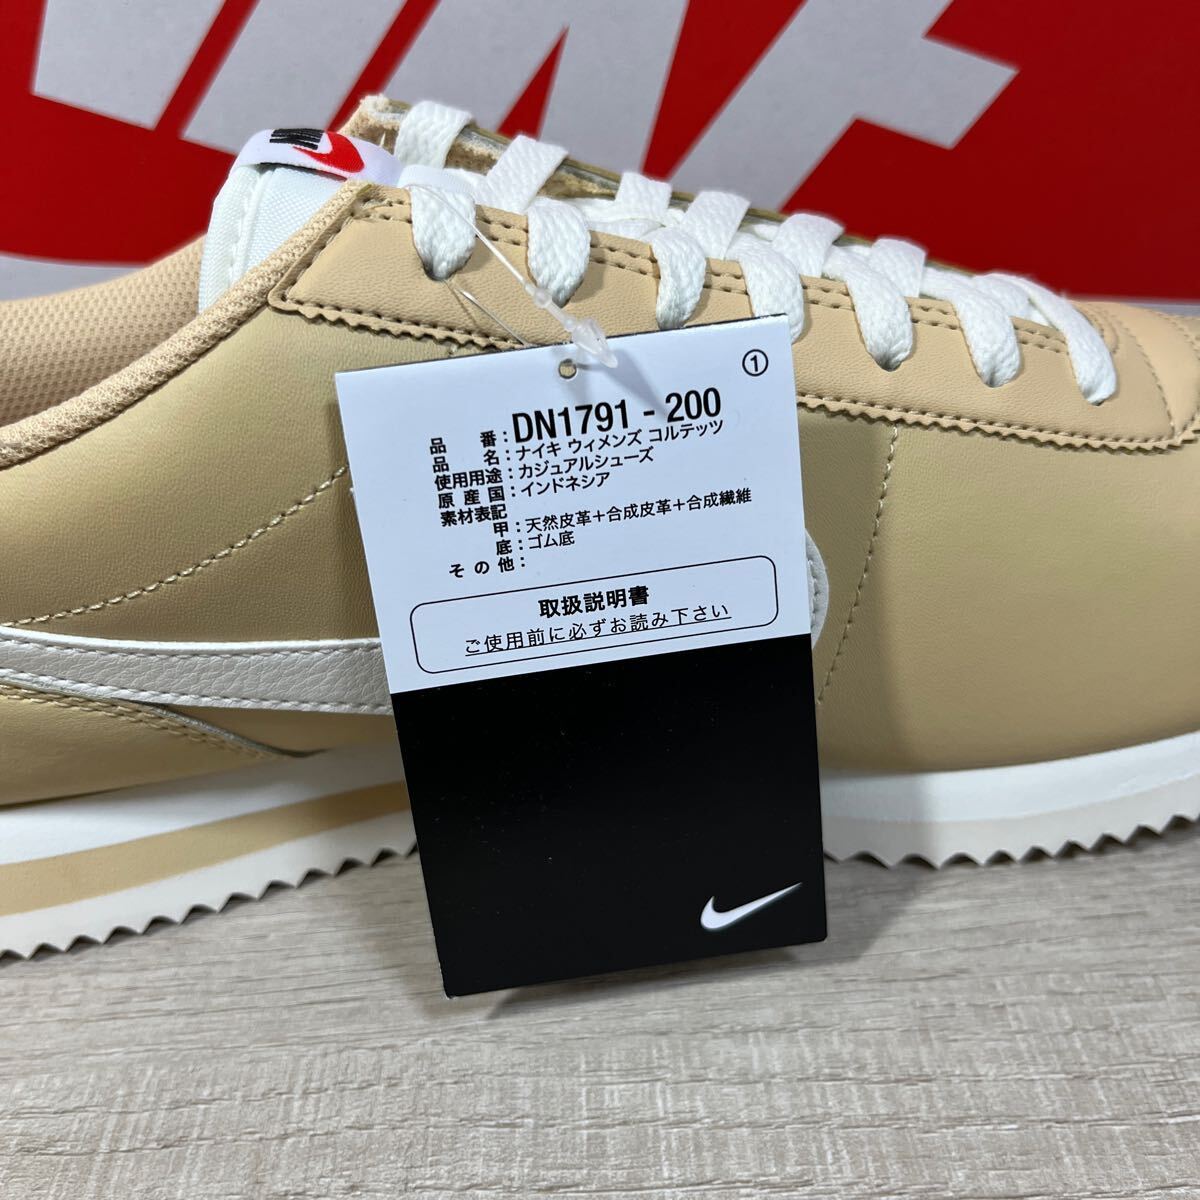 1 jpy start outright sales new goods unused NIKE CORTEZ Nike korutetsu sneakers standard white beige 29cm leather complete sale goods 